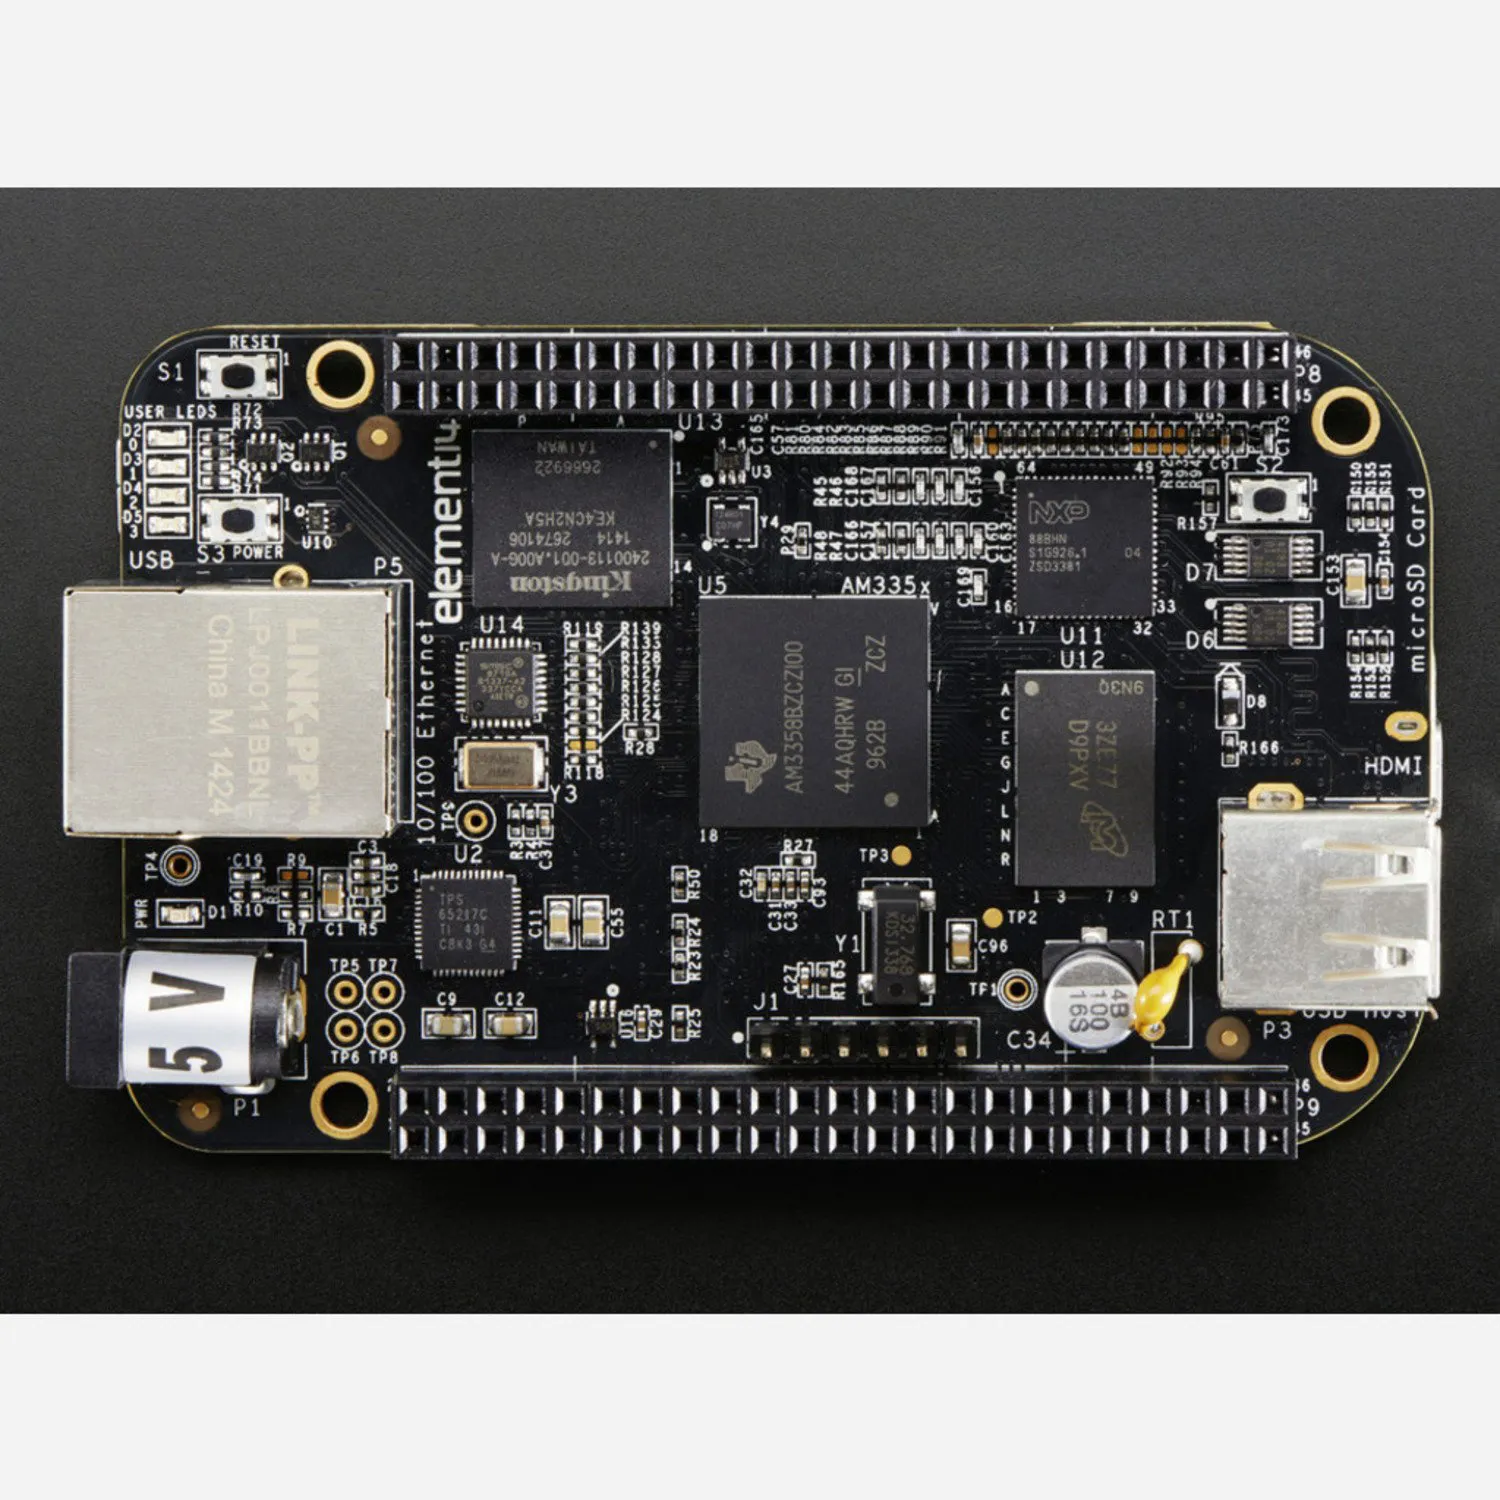 Photo of Element 14 BeagleBone Black Rev C - 4GB - Pre-installed Debian [Element 14 Version]